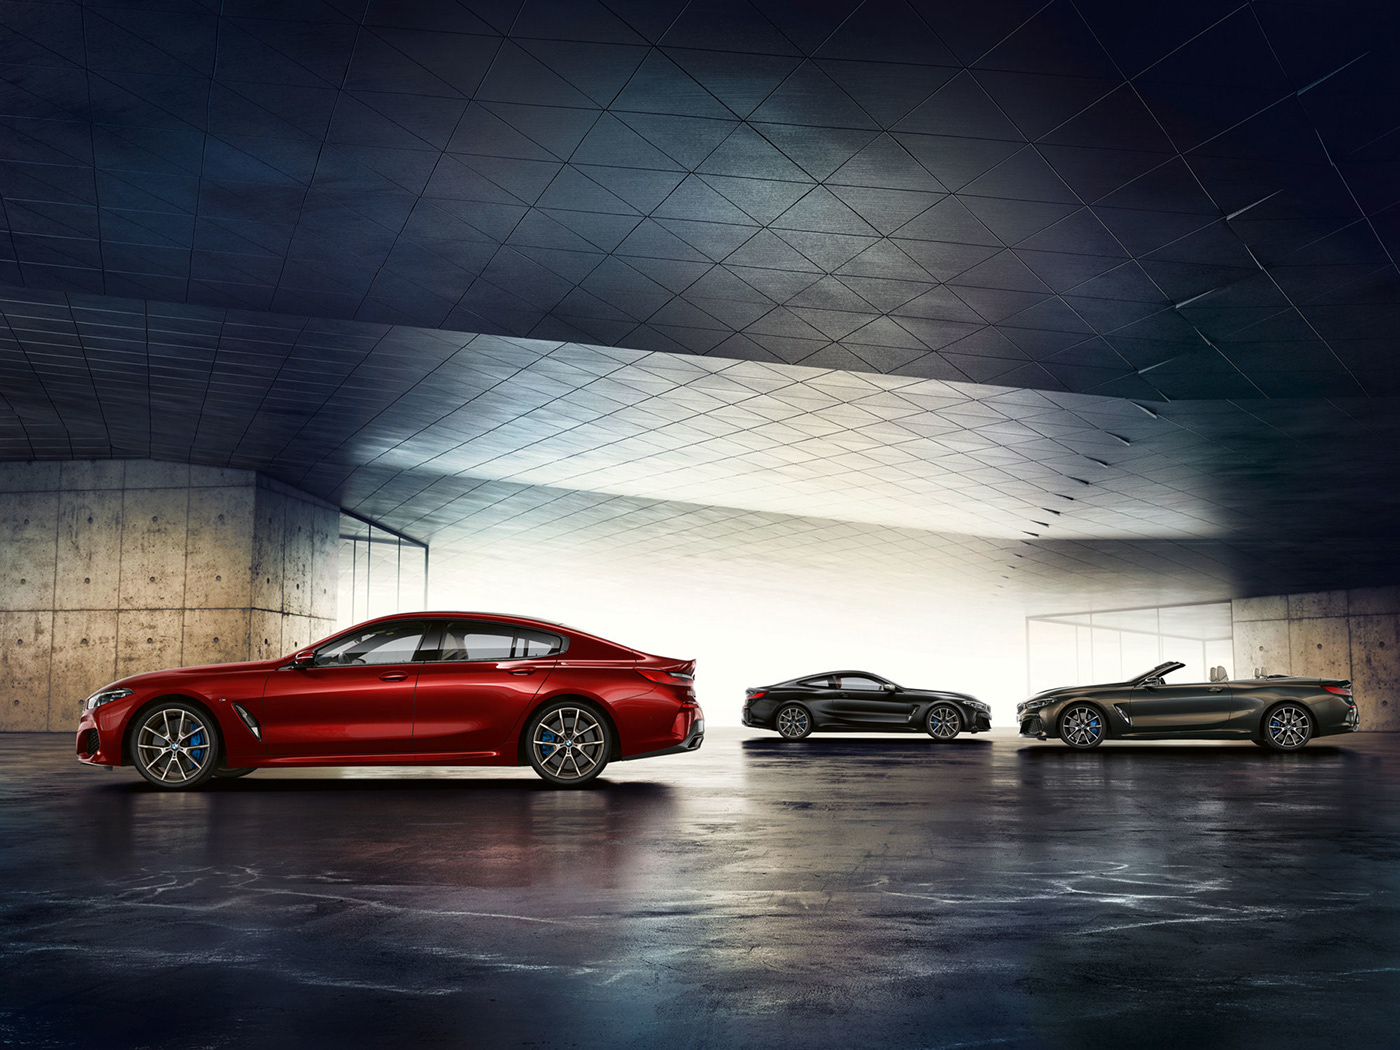 BMW gkl X7 7-series CGI 8-series metallic laser-light futuristic Hall